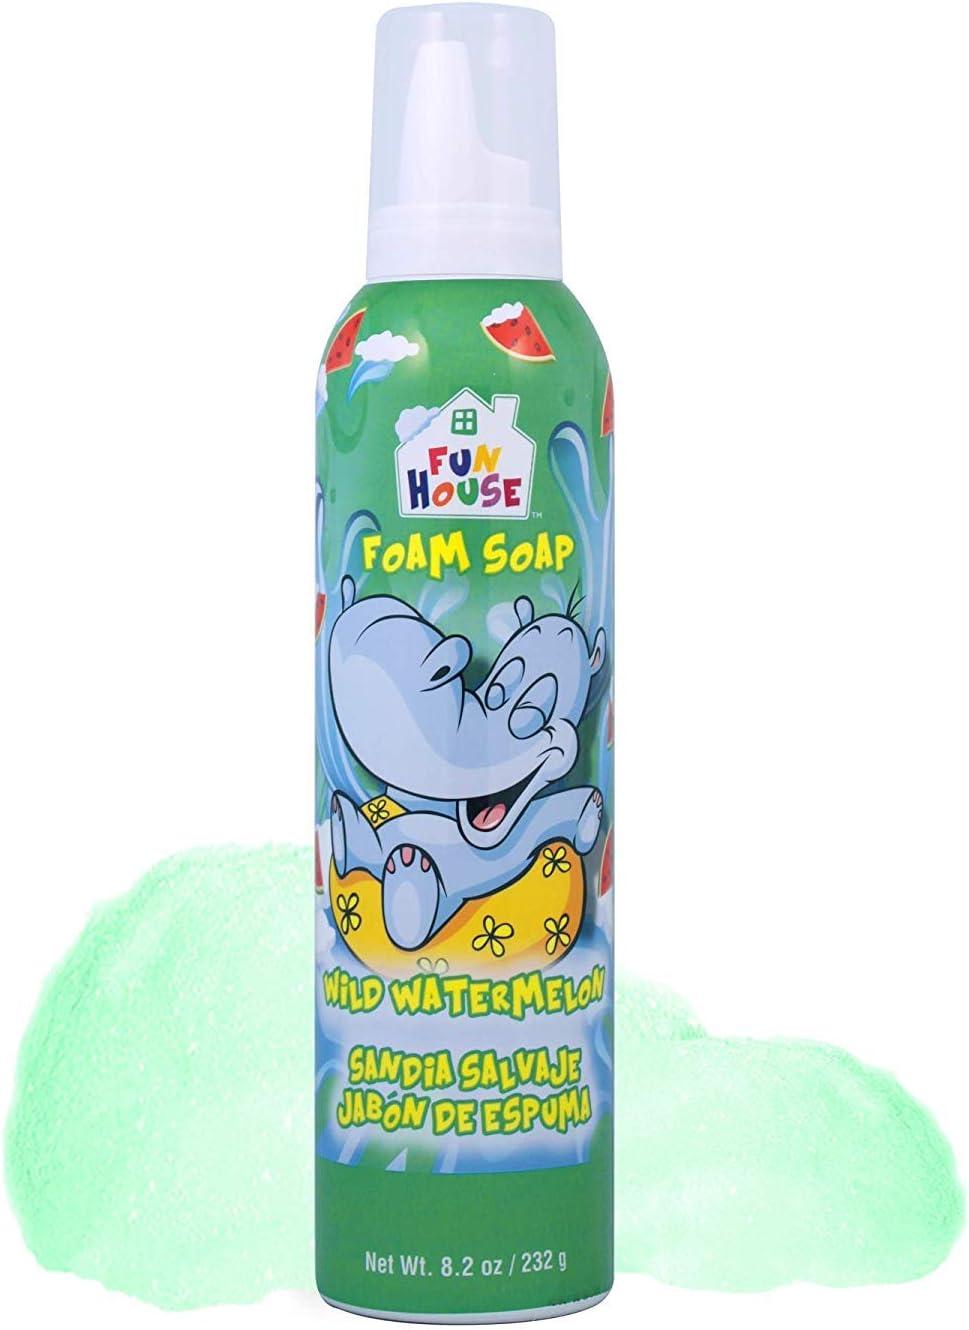 Fun House Kids Foam Soap 8 Pack Assorted Flavor Foam Soap, 8.2 oz each